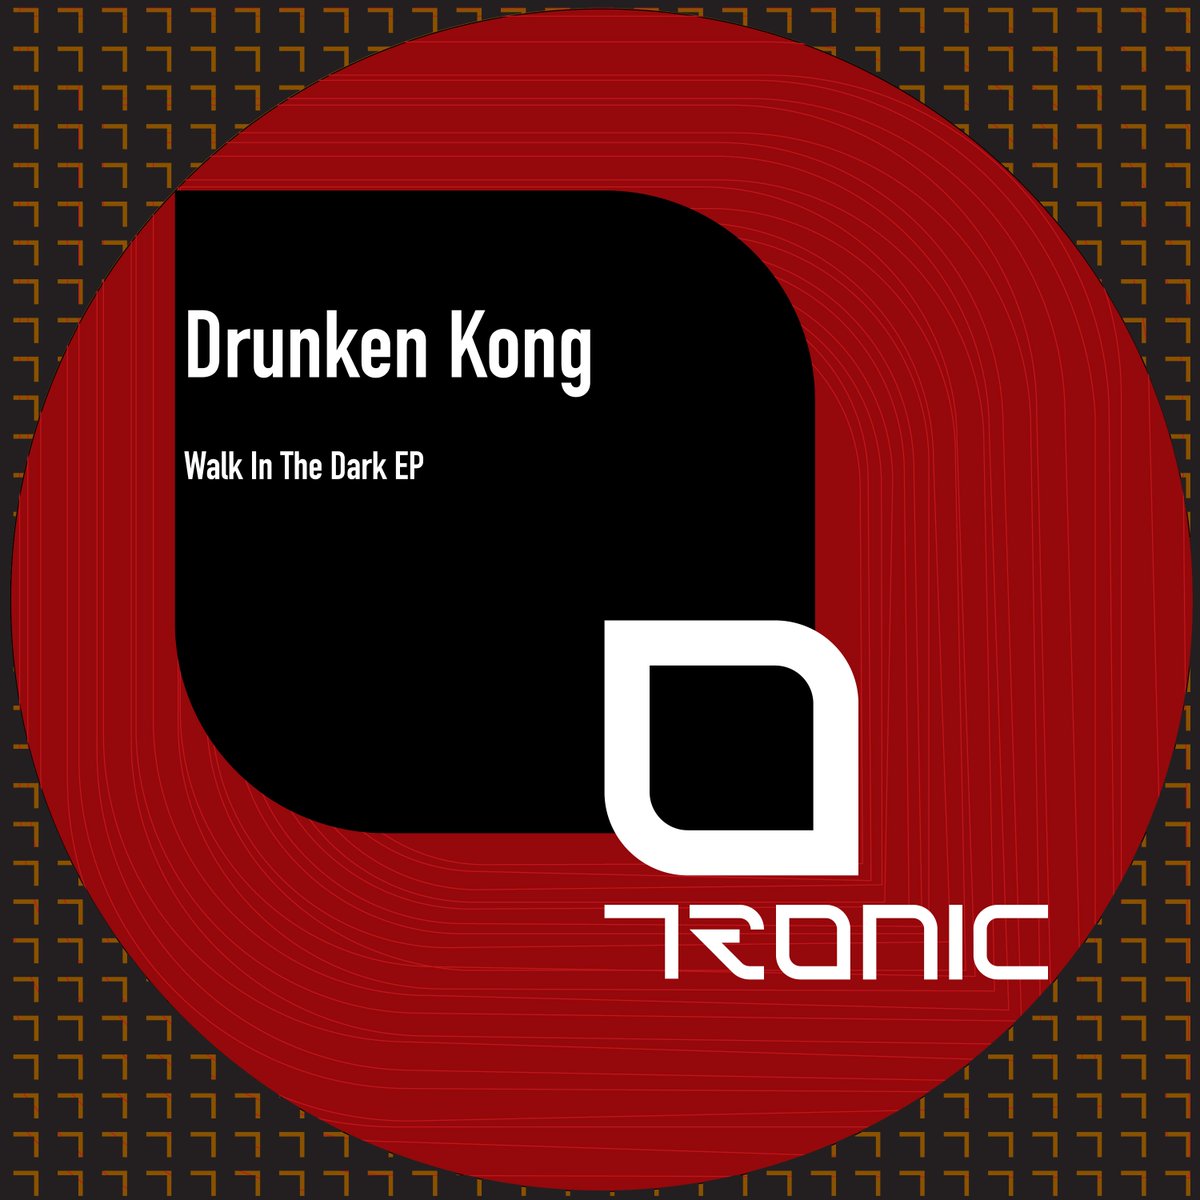 o u t n o w @drunken_kong - Walk In The Dark EP: fanlink.to/TR483 #techno